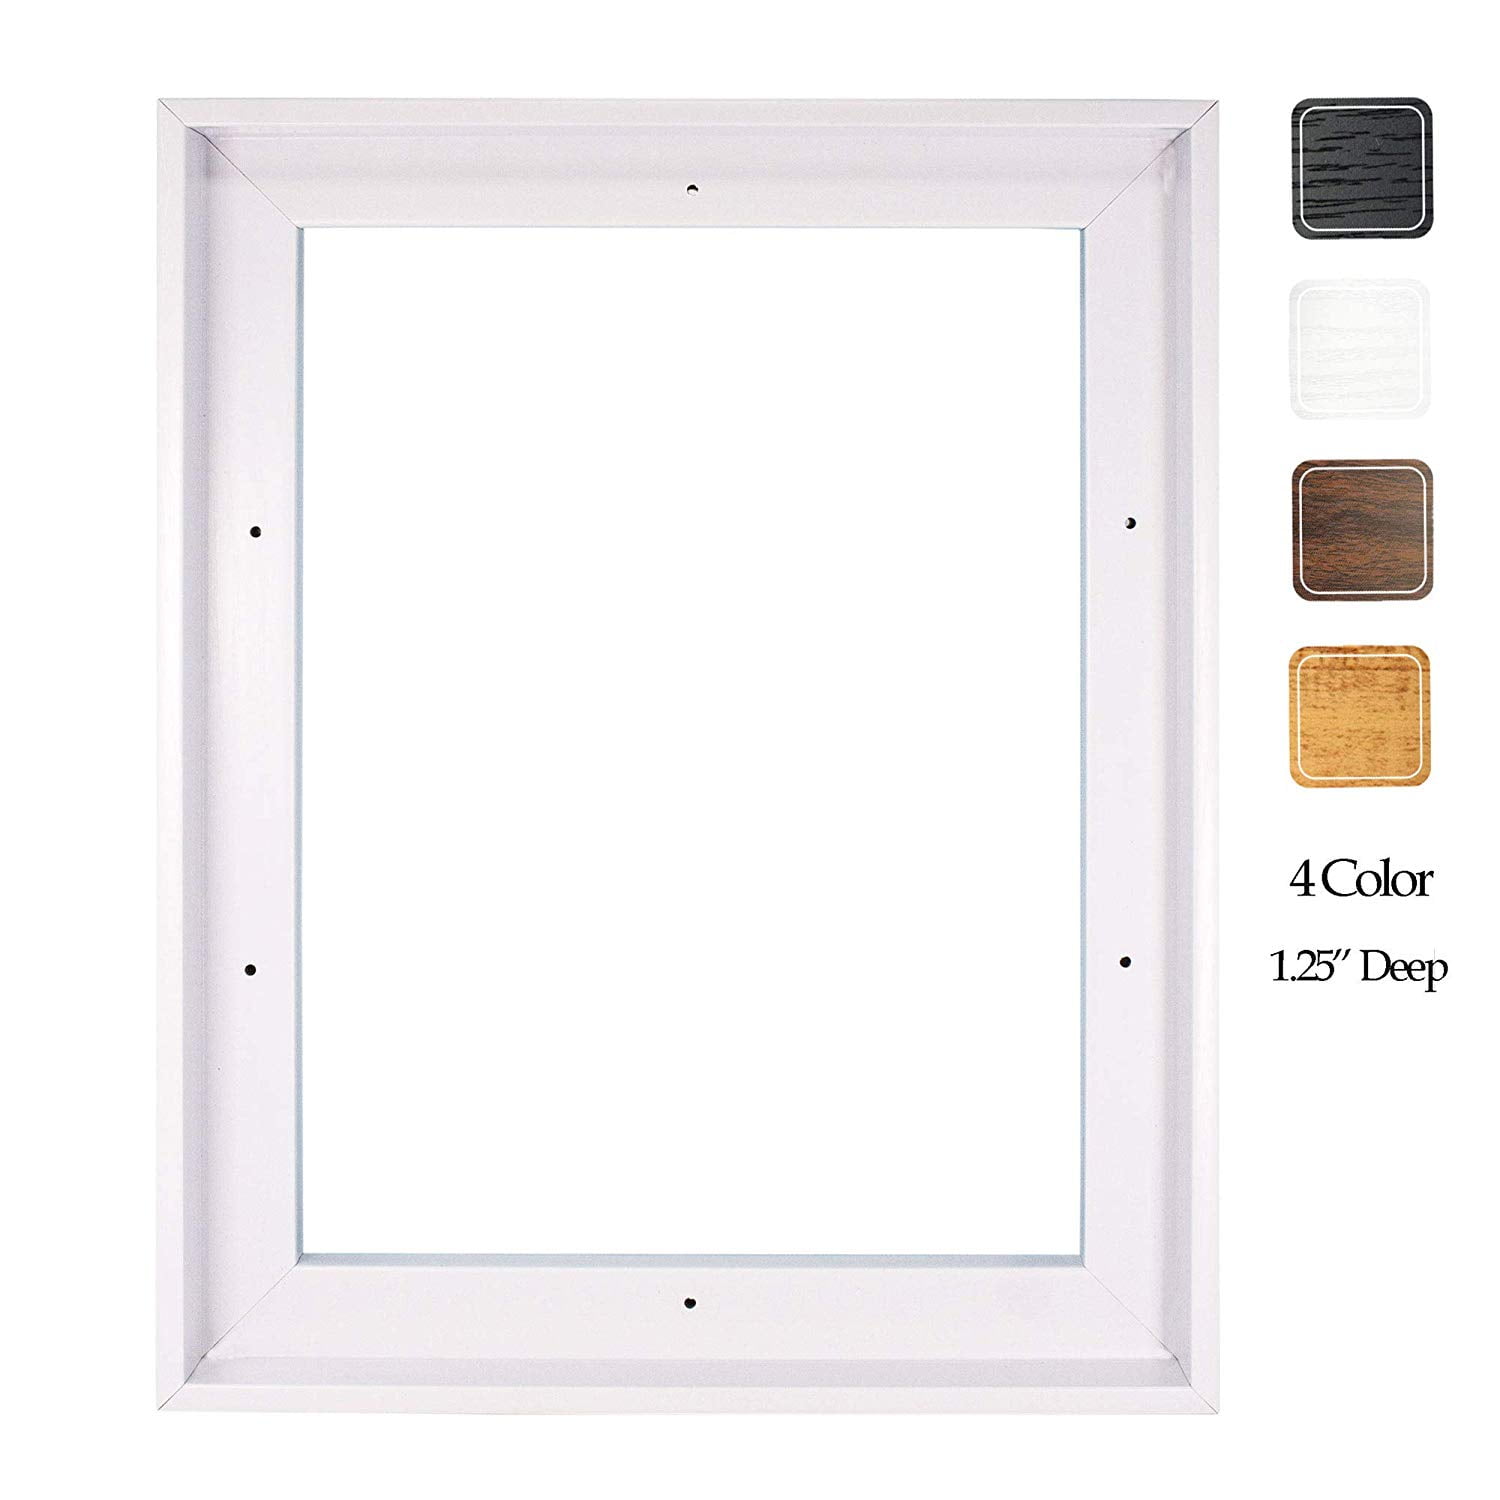 Float frame for 4x4 x 3/4  panel